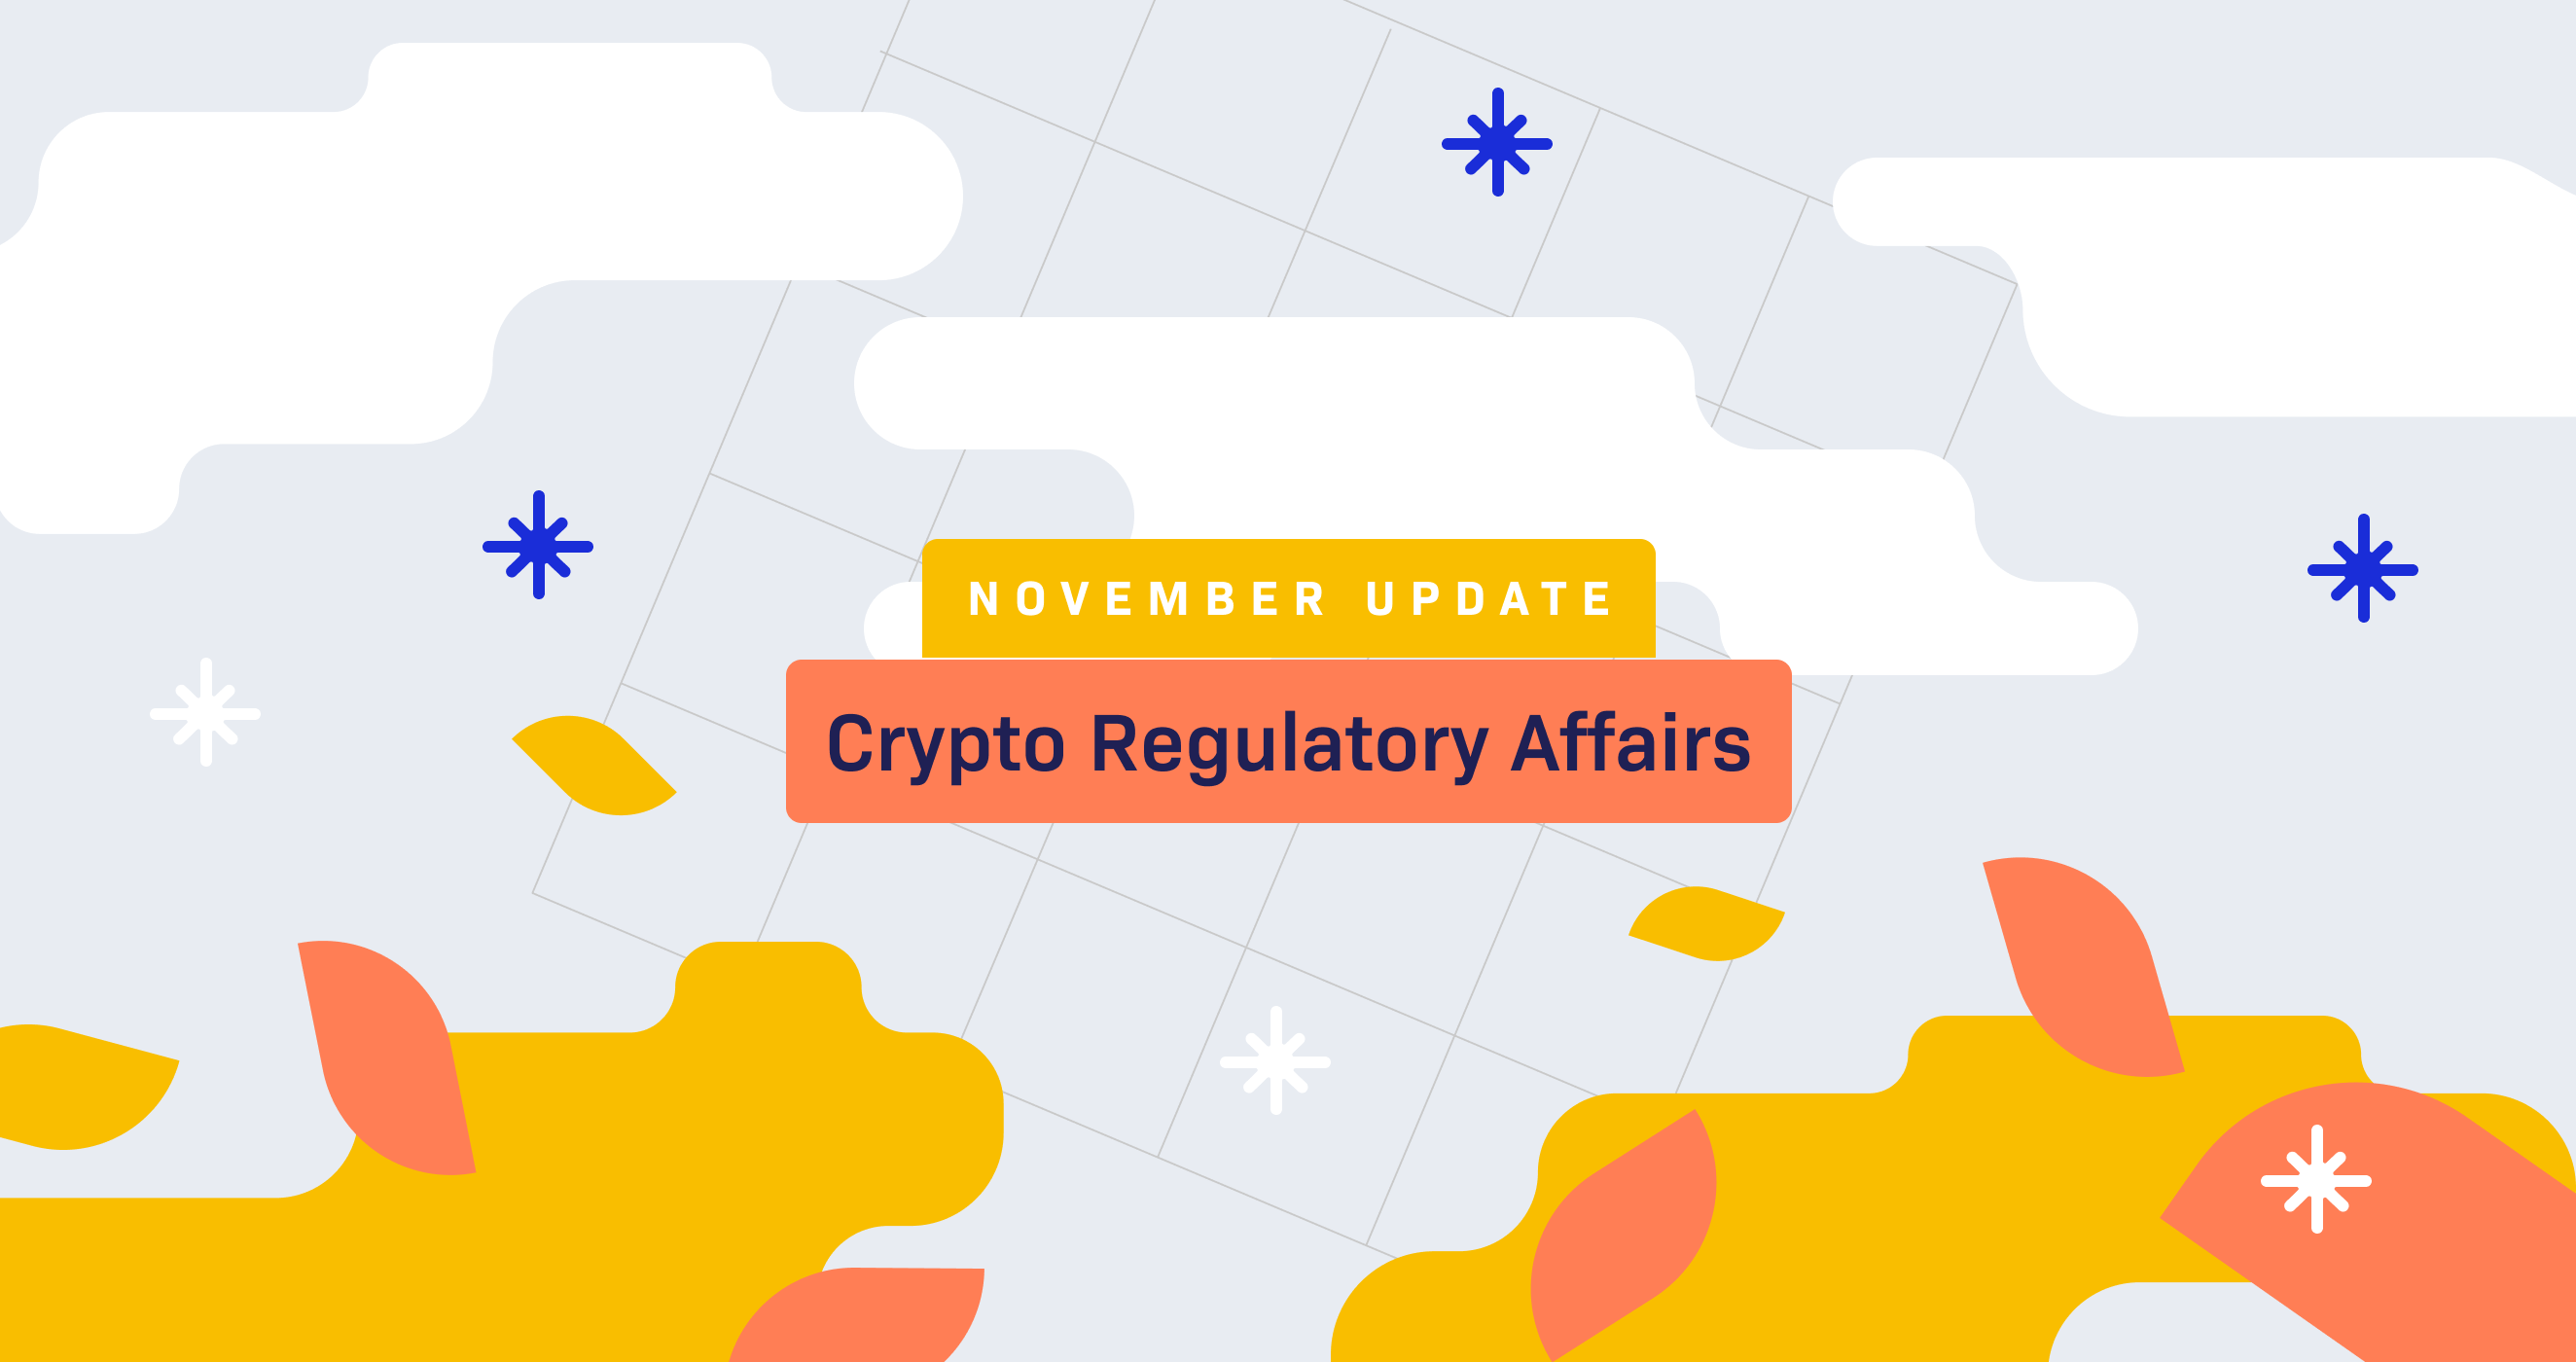 November 2022 Update on Crypto Regulatory Affairs 